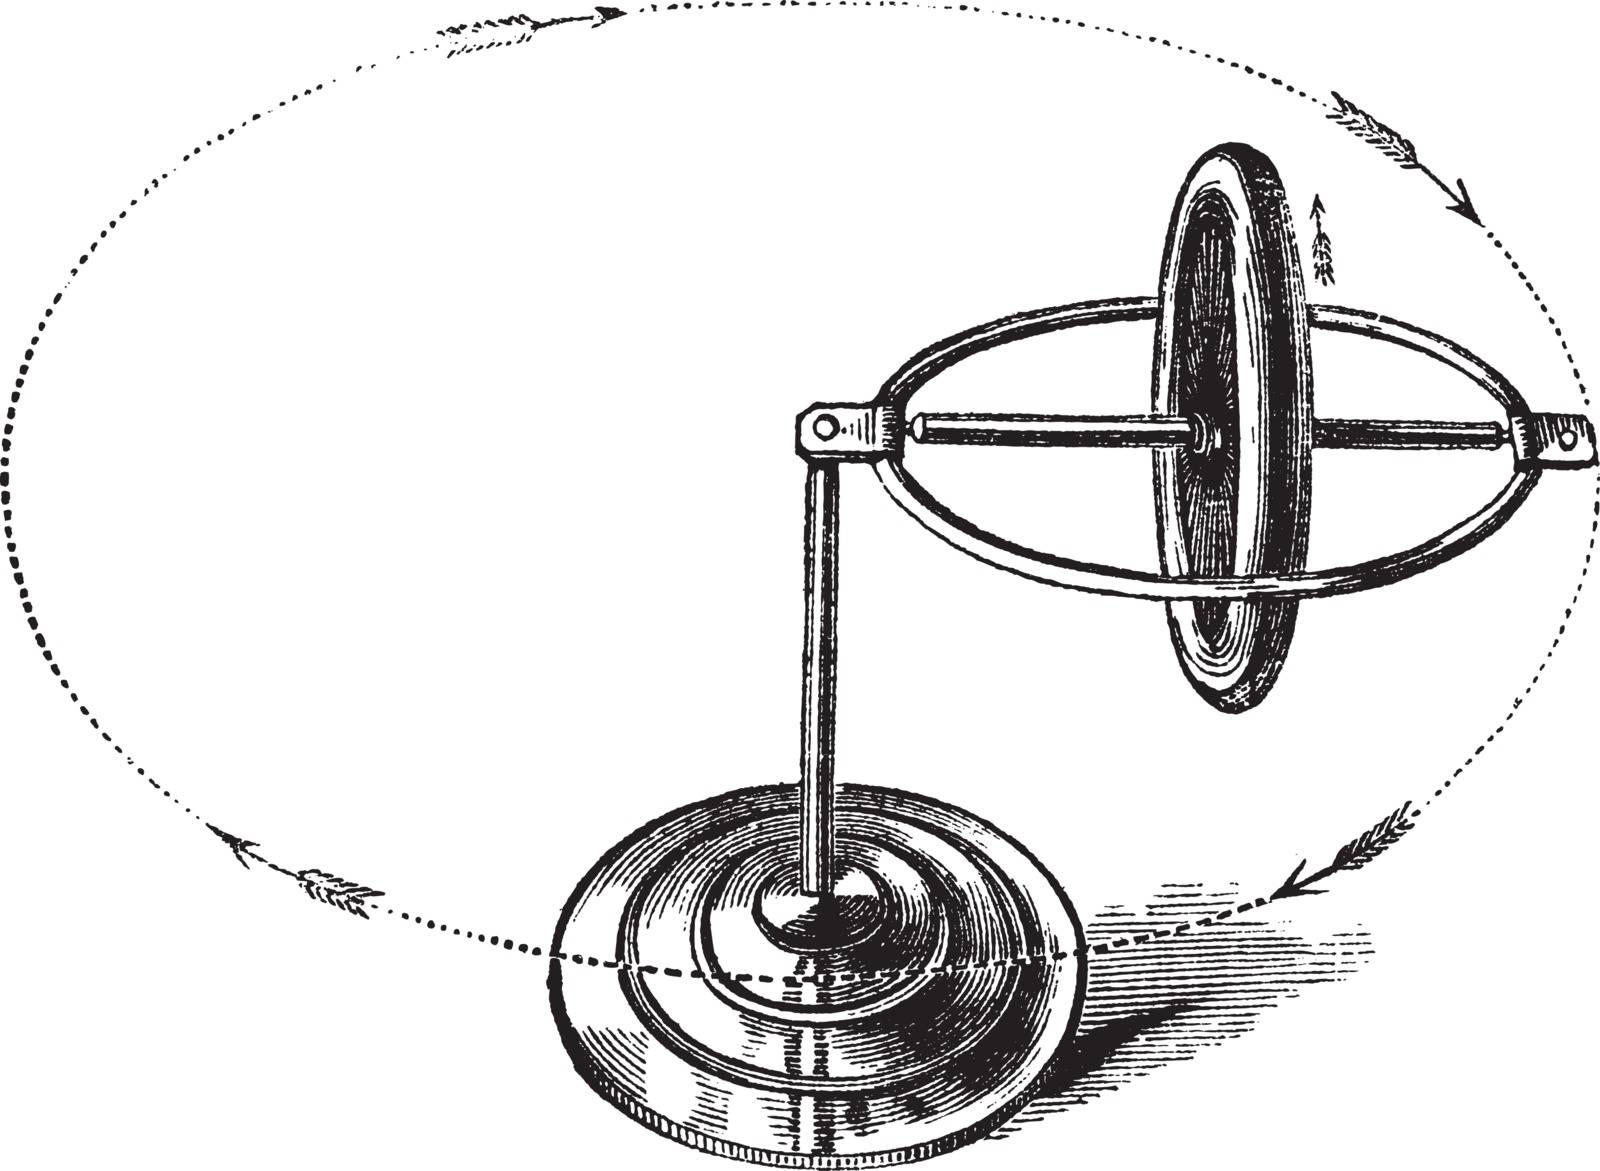 Gyroscope vintage engraving by Morphart